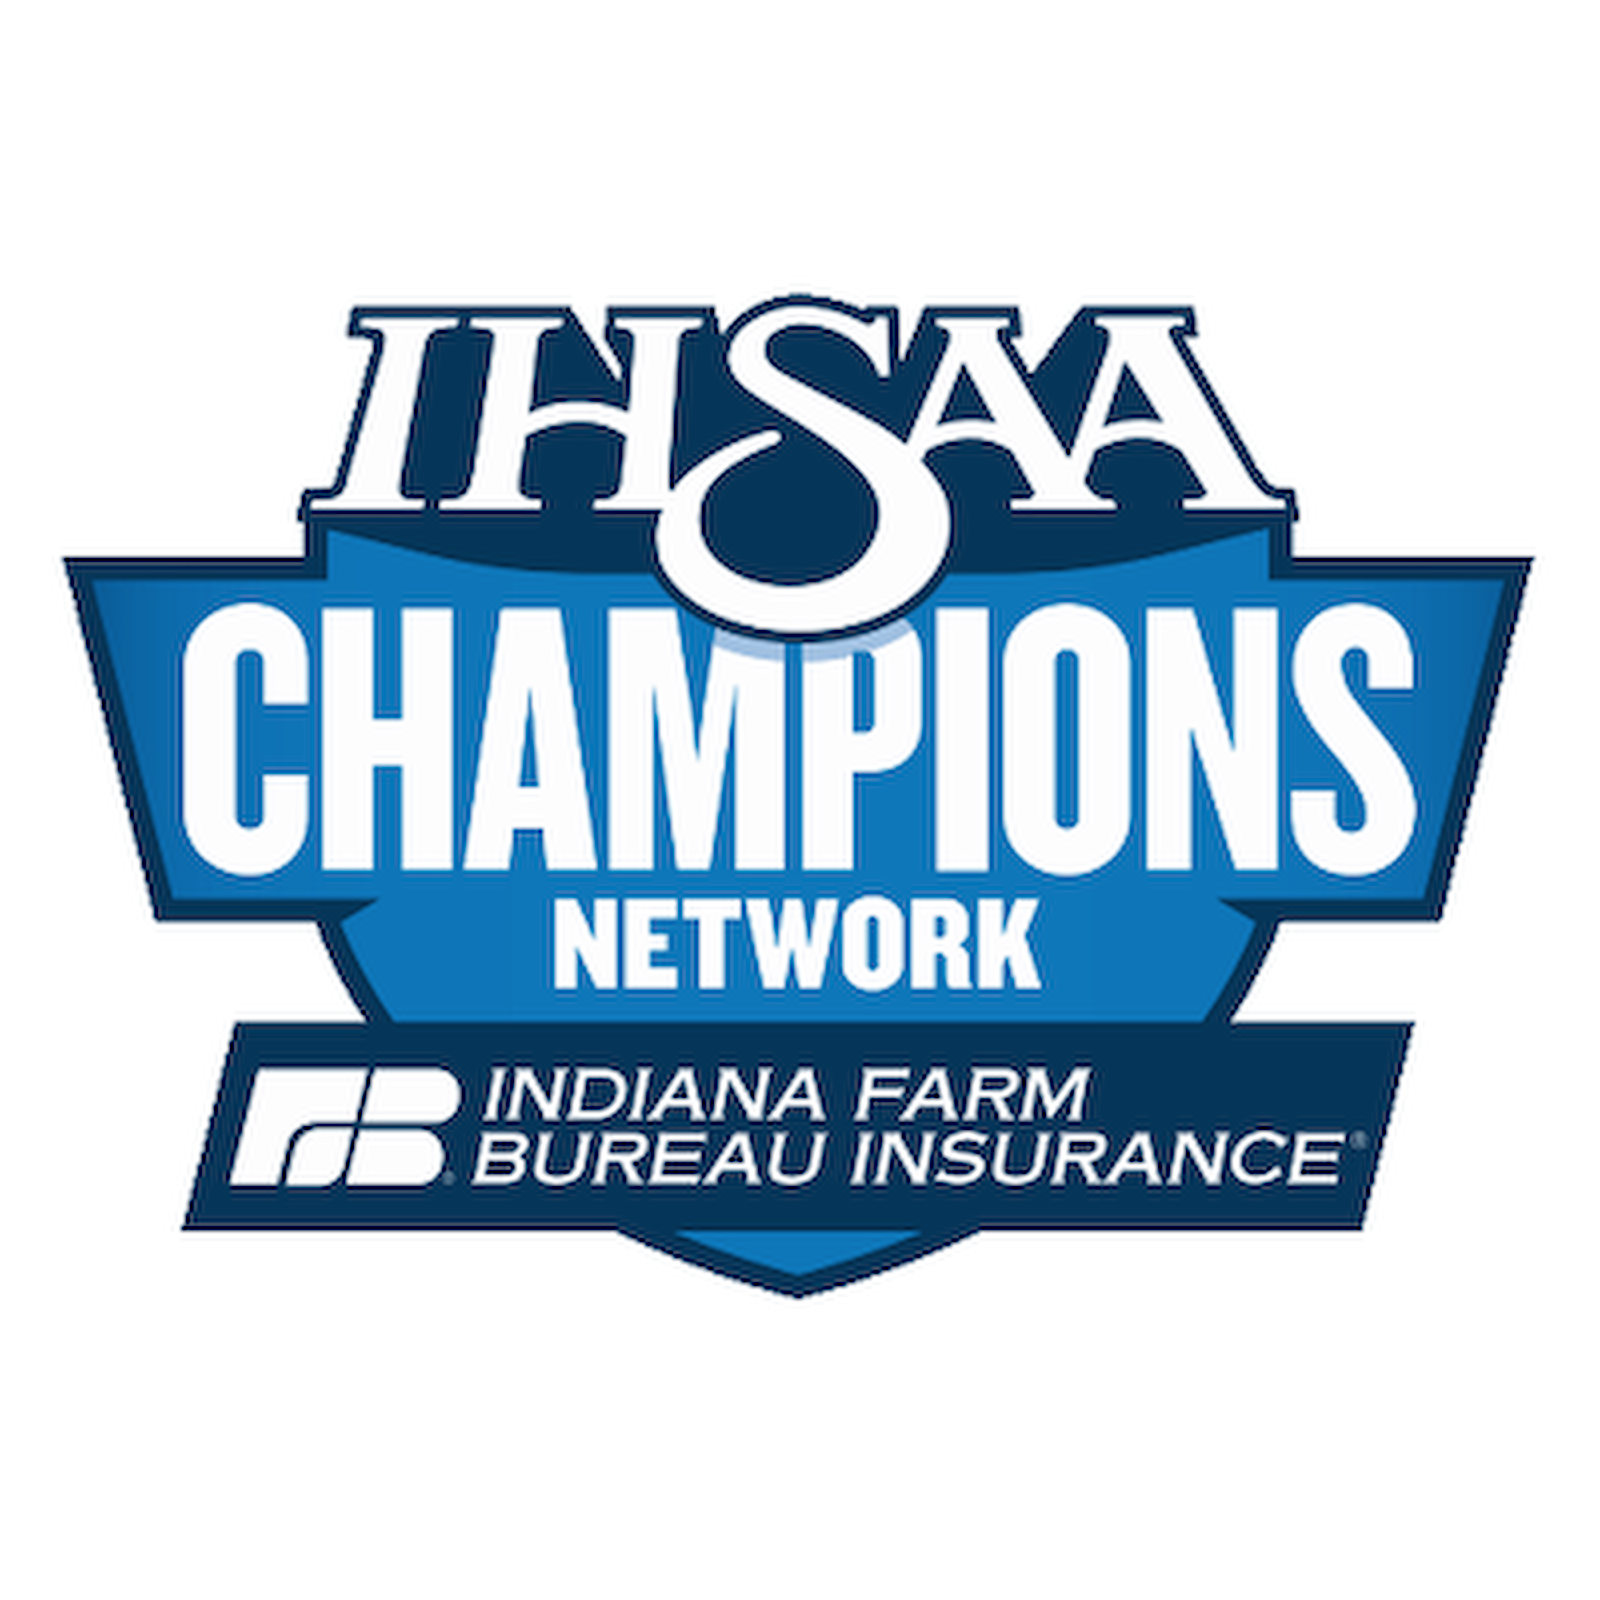 ihsaa-champions-network-logo.png